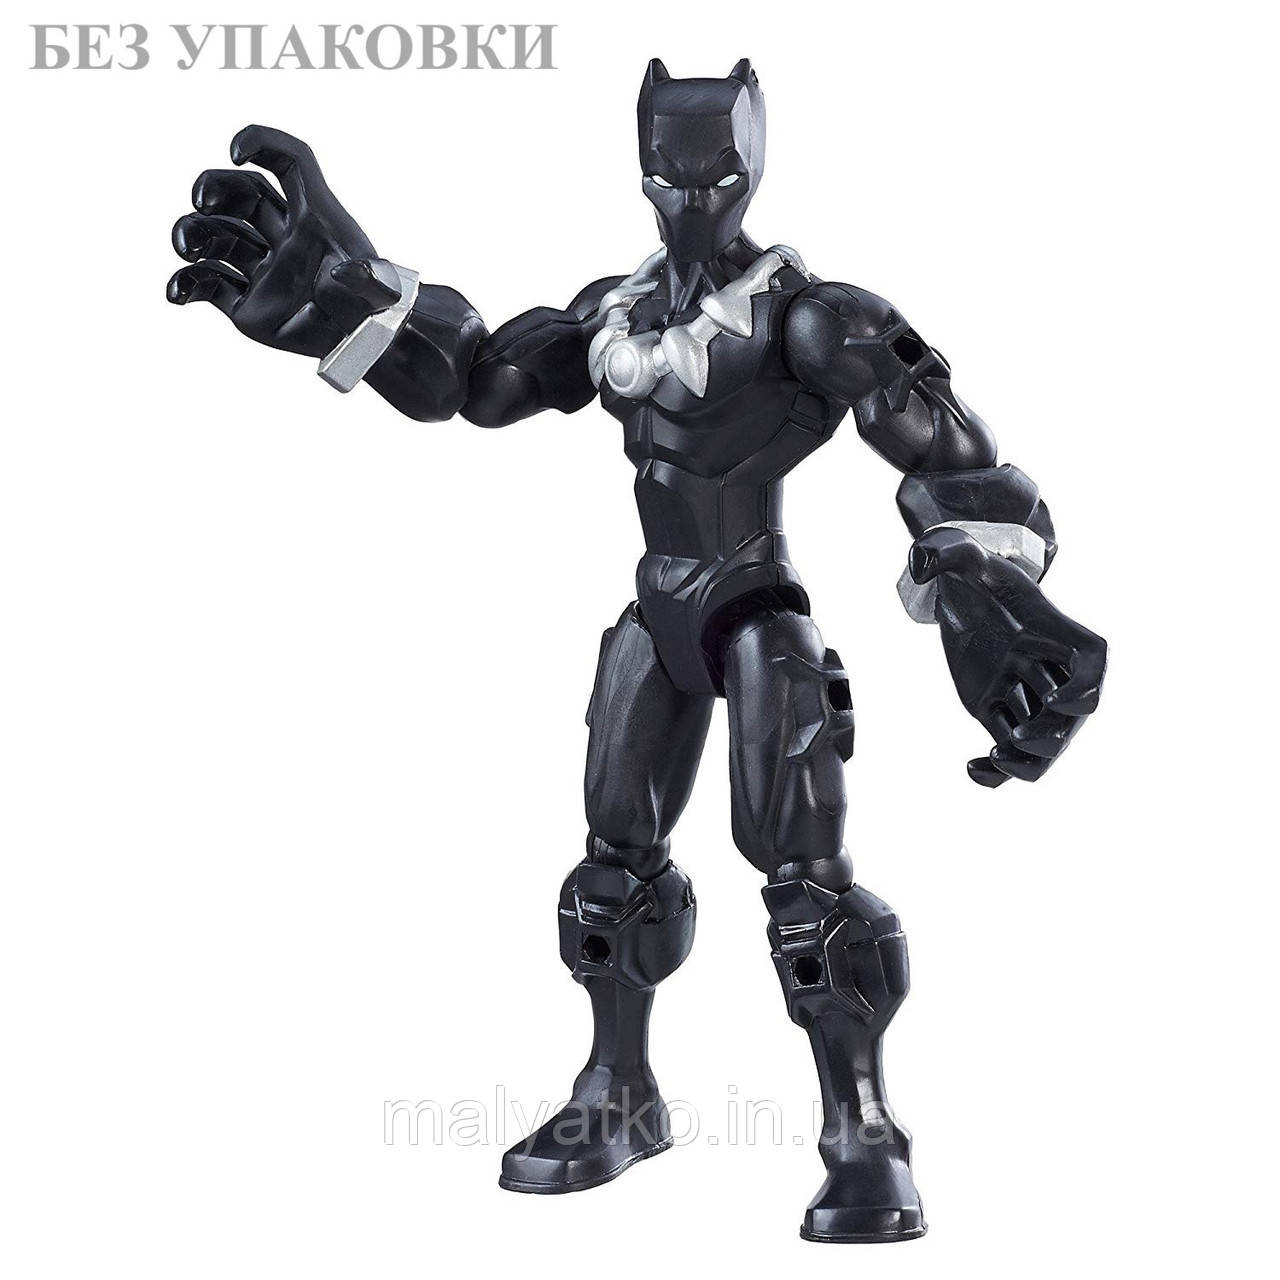 Розбірна фігурка Чорна Пантера "Машерс" - Black Panther, Super Hero Mashers, Hasbro